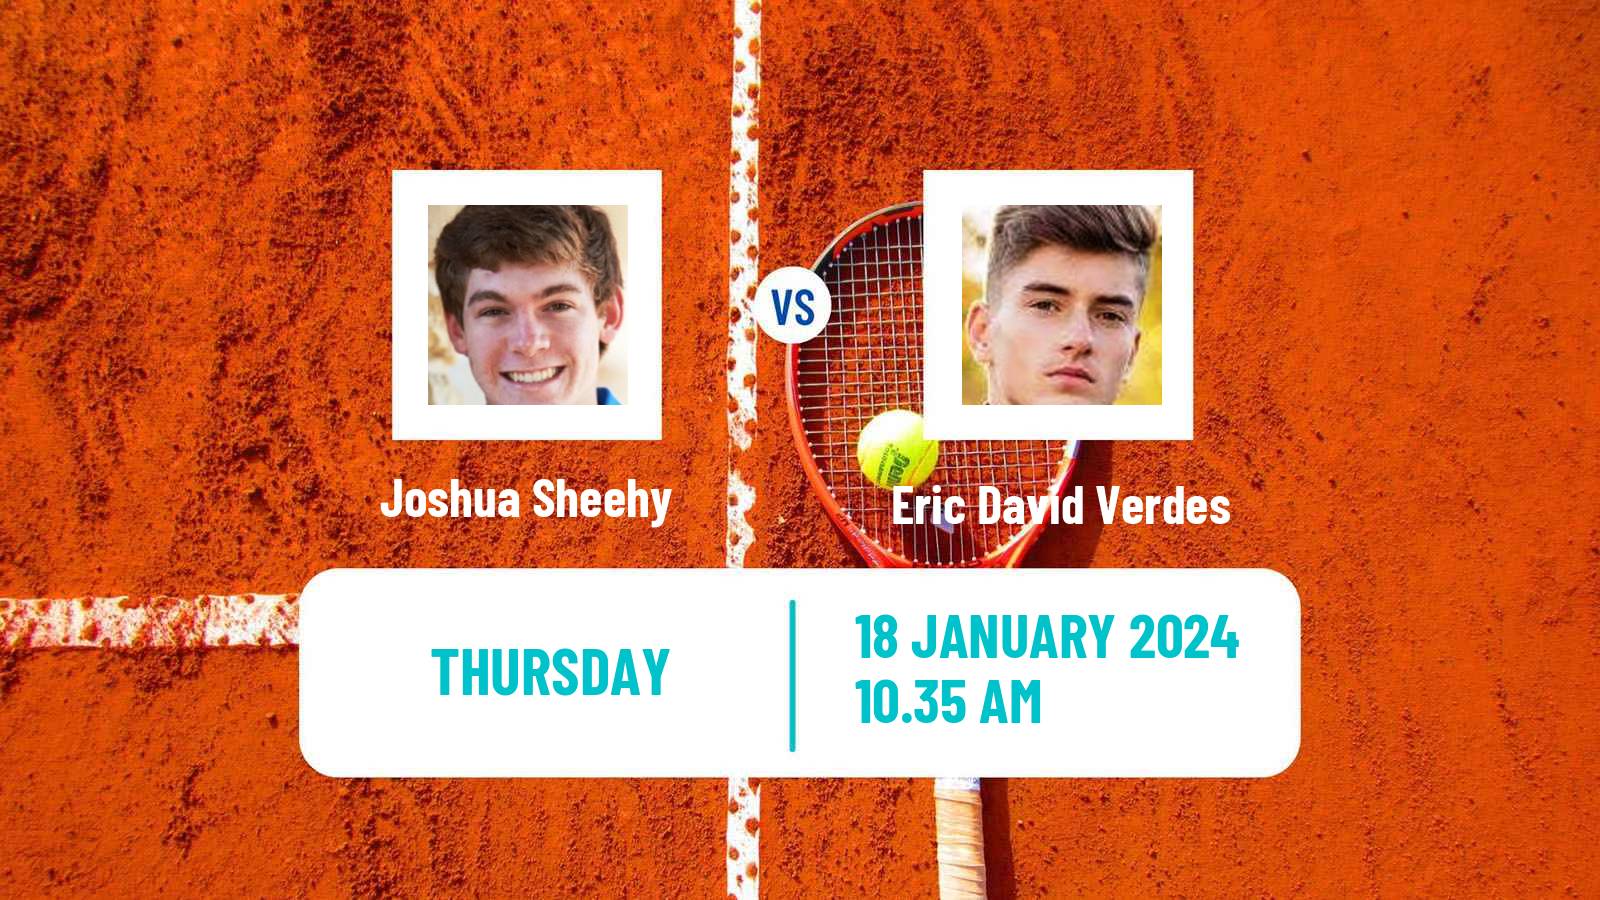 Tennis ITF M25 Ithaca Ny Men Joshua Sheehy - Eric David Verdes